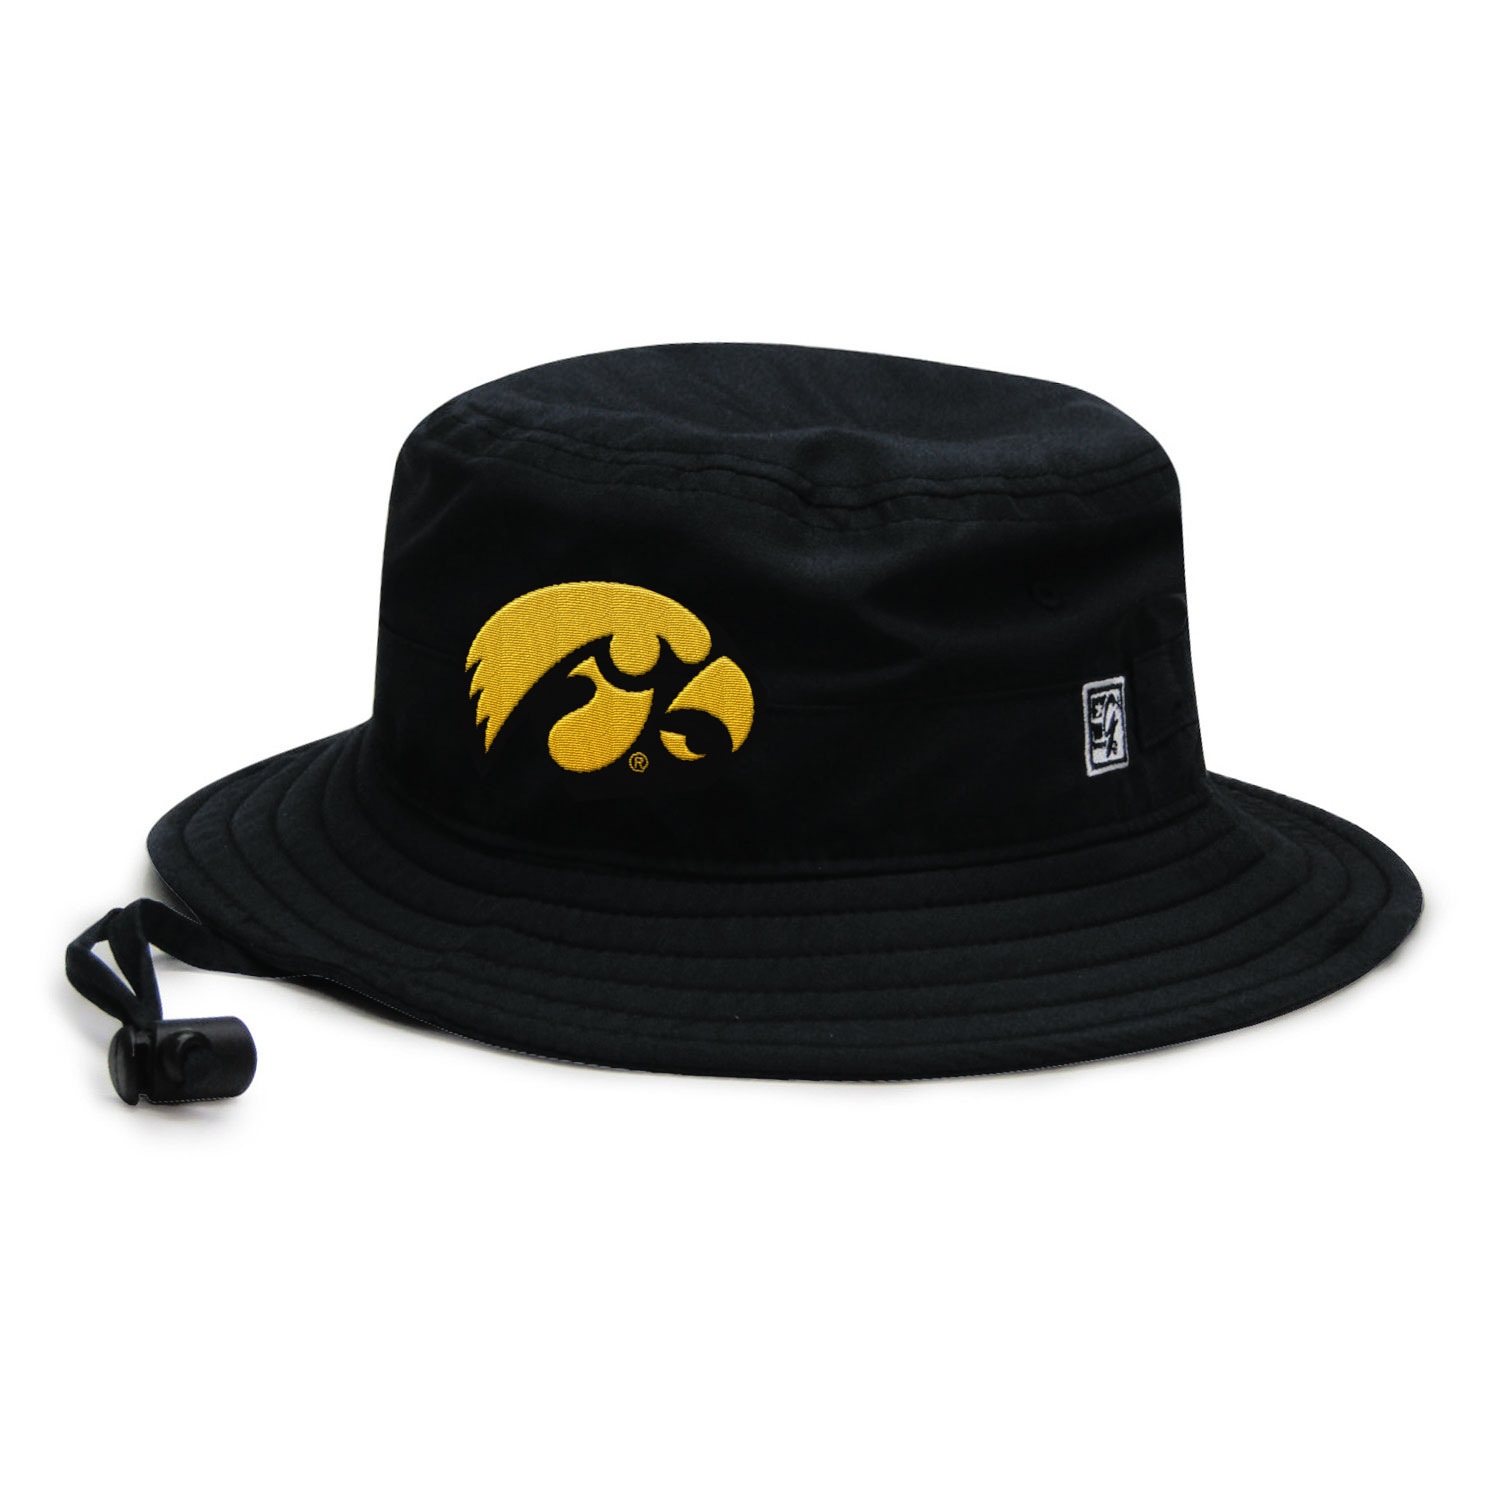 The Game Adult Unisex Iowa Hawkeyes Ultra Light Bucket Hat One Size | eBay